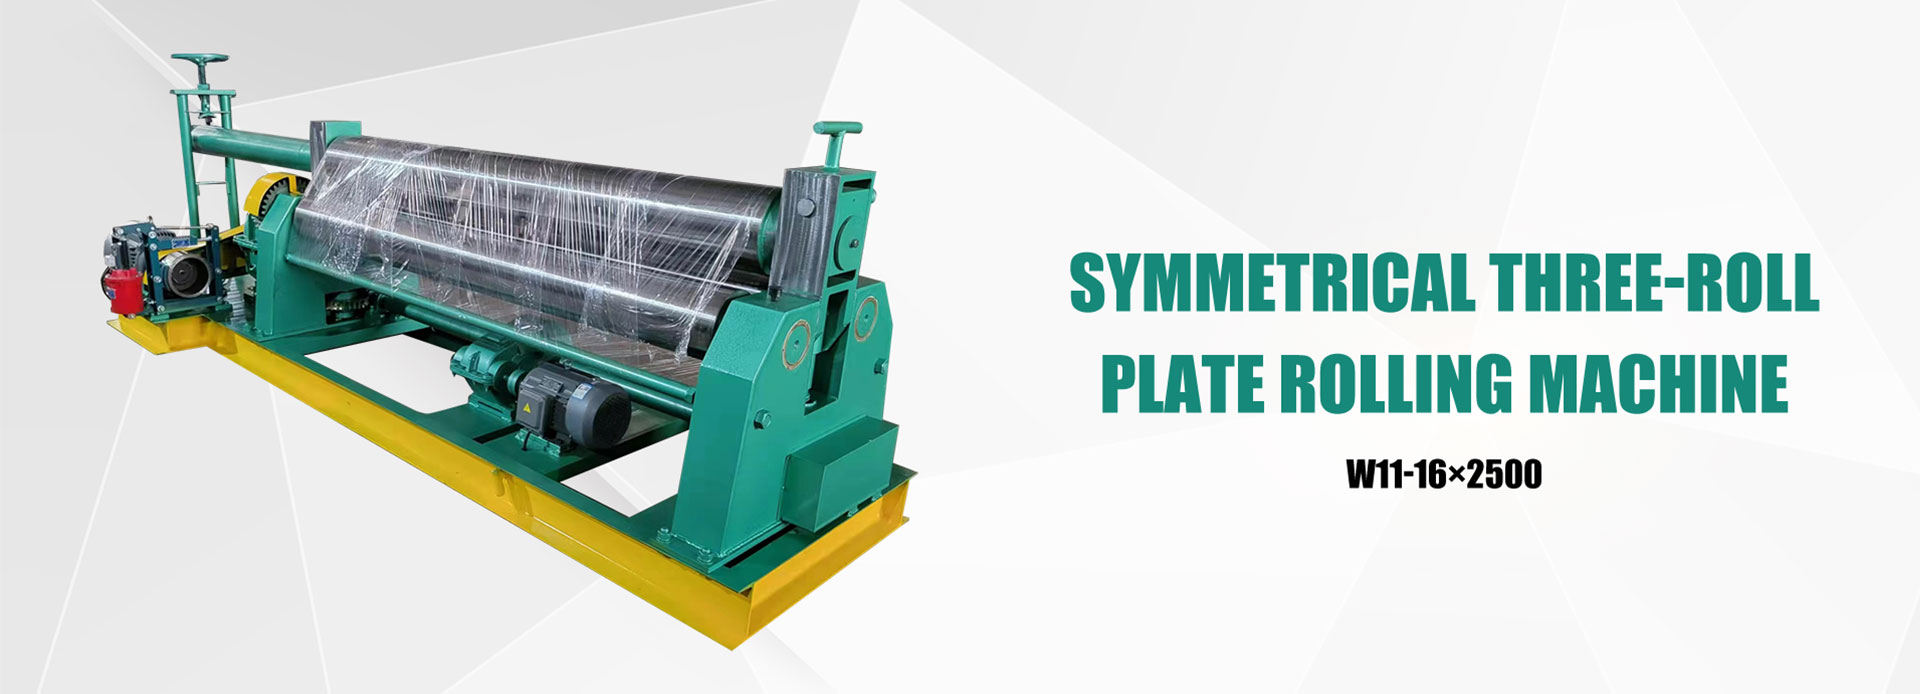 Symmetrical Three-roll Plate Rolling Machine e rekisoang